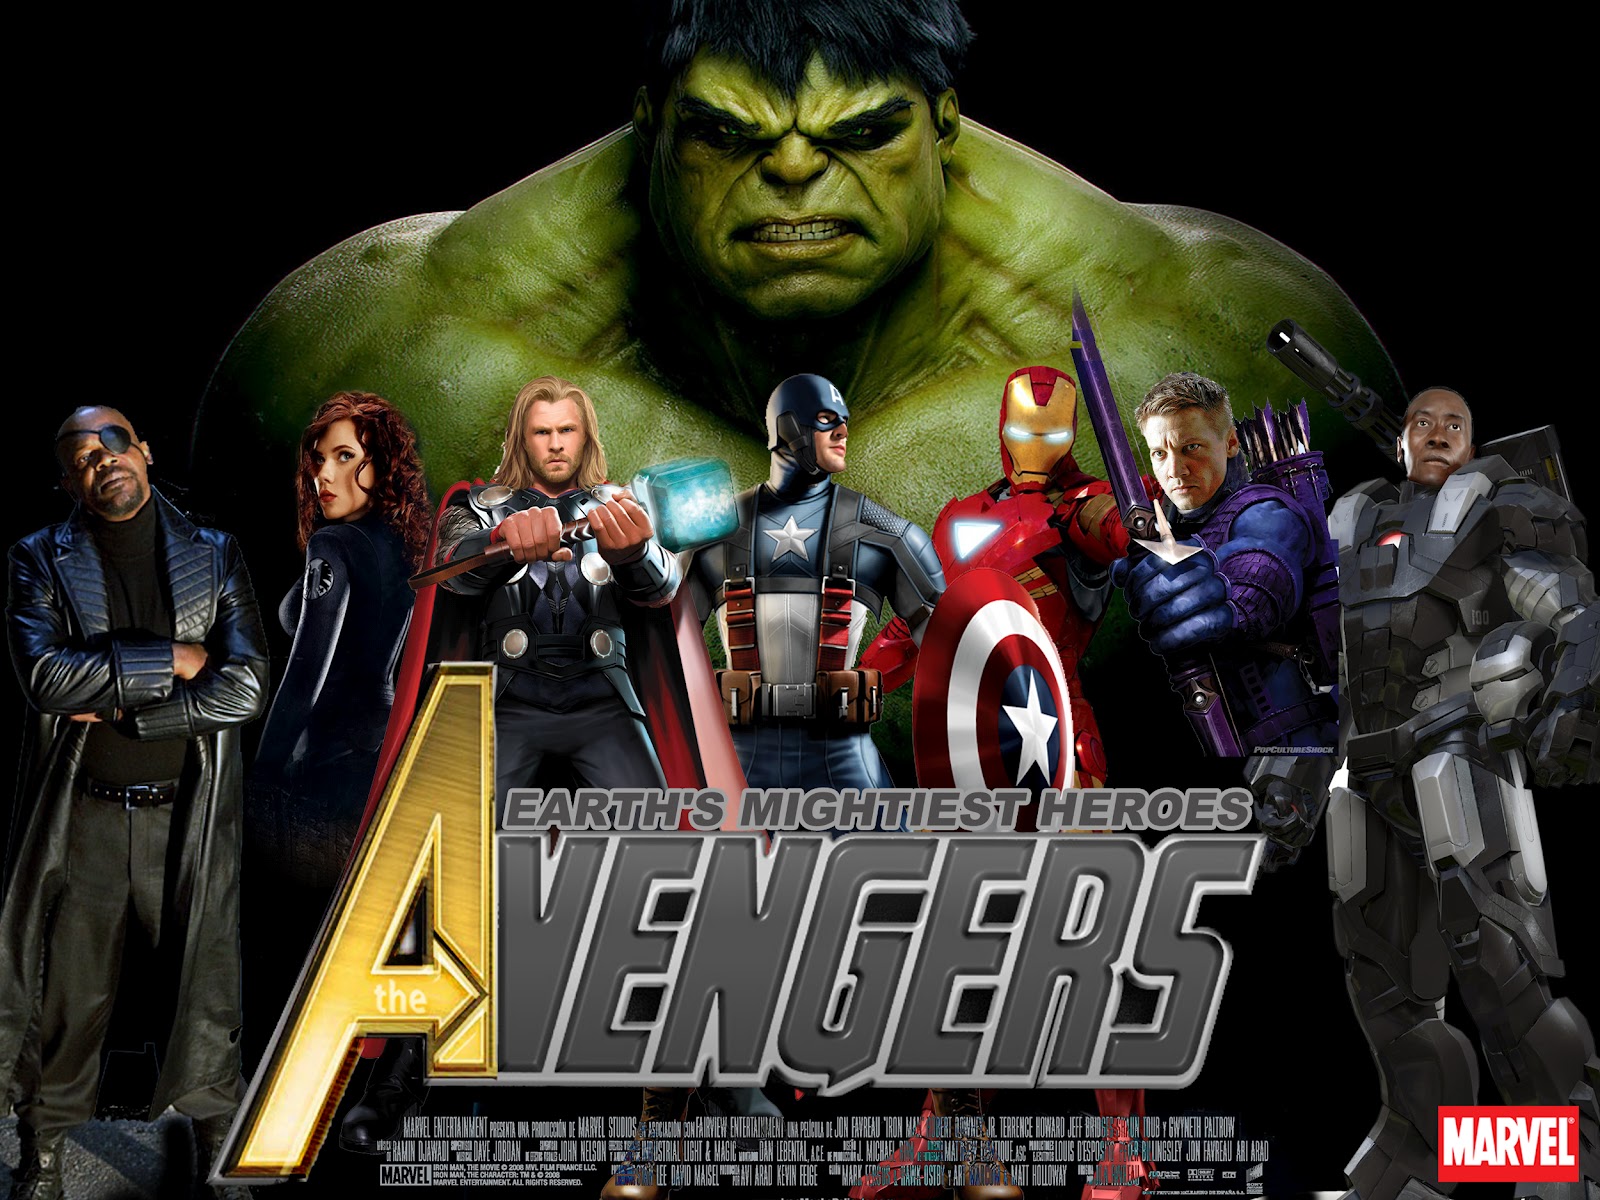 https://blogger.googleusercontent.com/img/b/R29vZ2xl/AVvXsEiIQYgzlAR1hx6z84onMkN18y2Db0T1wzmJcJoJdOpUDcvrPWZSULQf5gU4rJEfS3txHMORhtGFa4AjgxmokTRla65Q9VH5su5iNOEXXyH3WTfKf3vPrbD5H8_A8JPrIYWj9ulgrei6LWqG/s1600/The_Avengers_Movie_by_Alex4everdn.jpg